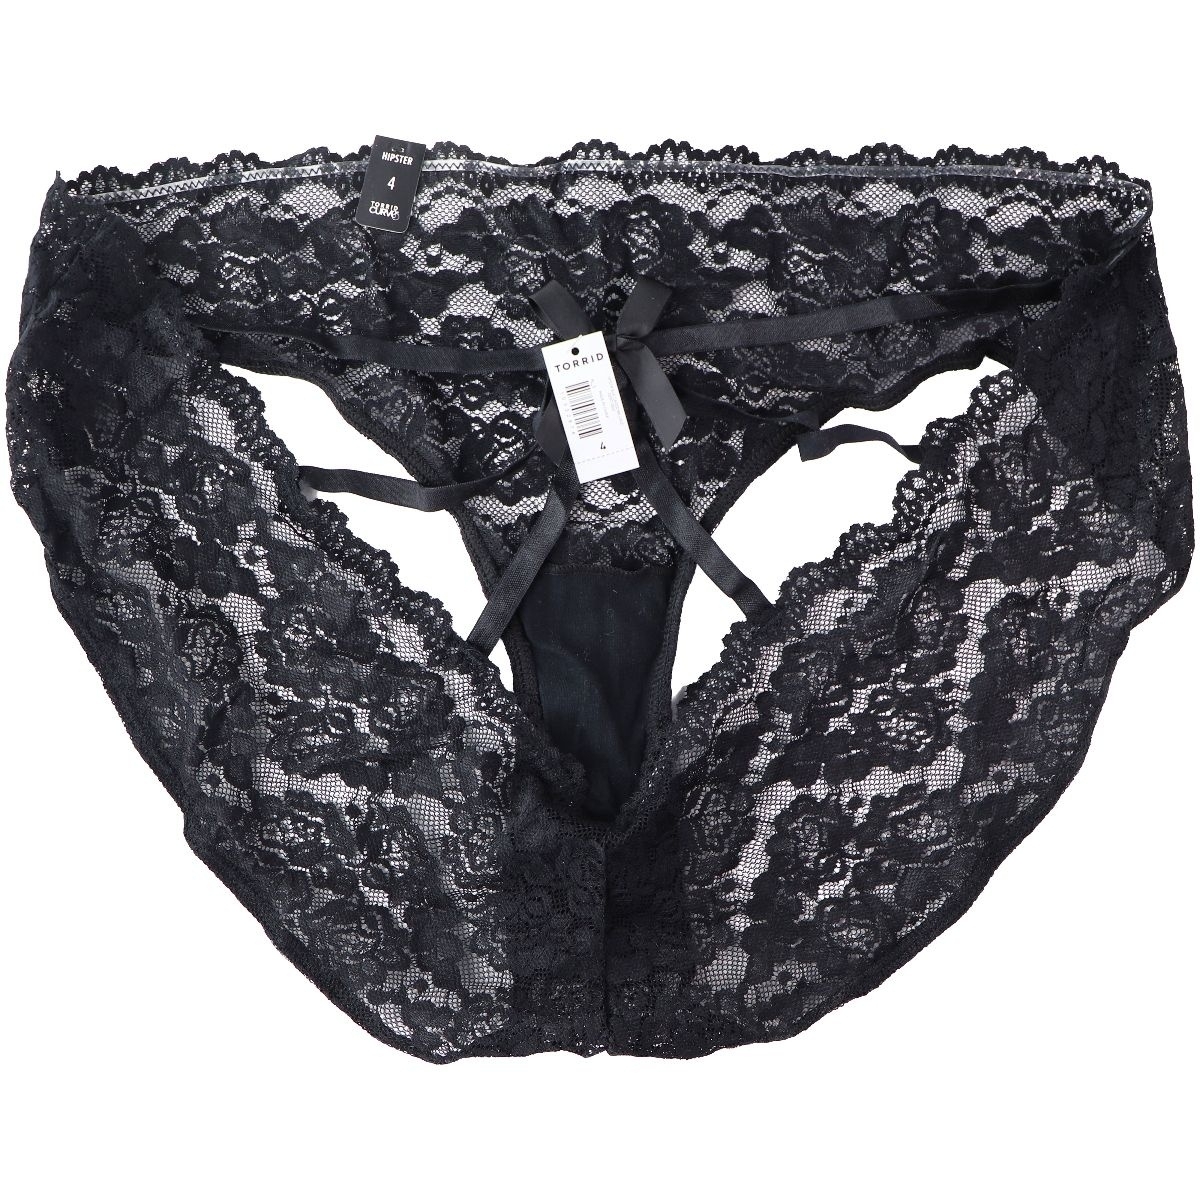 Torrid Womens Underwear Hipster Caged Black Lace - (Size 4) FL_3 10332674